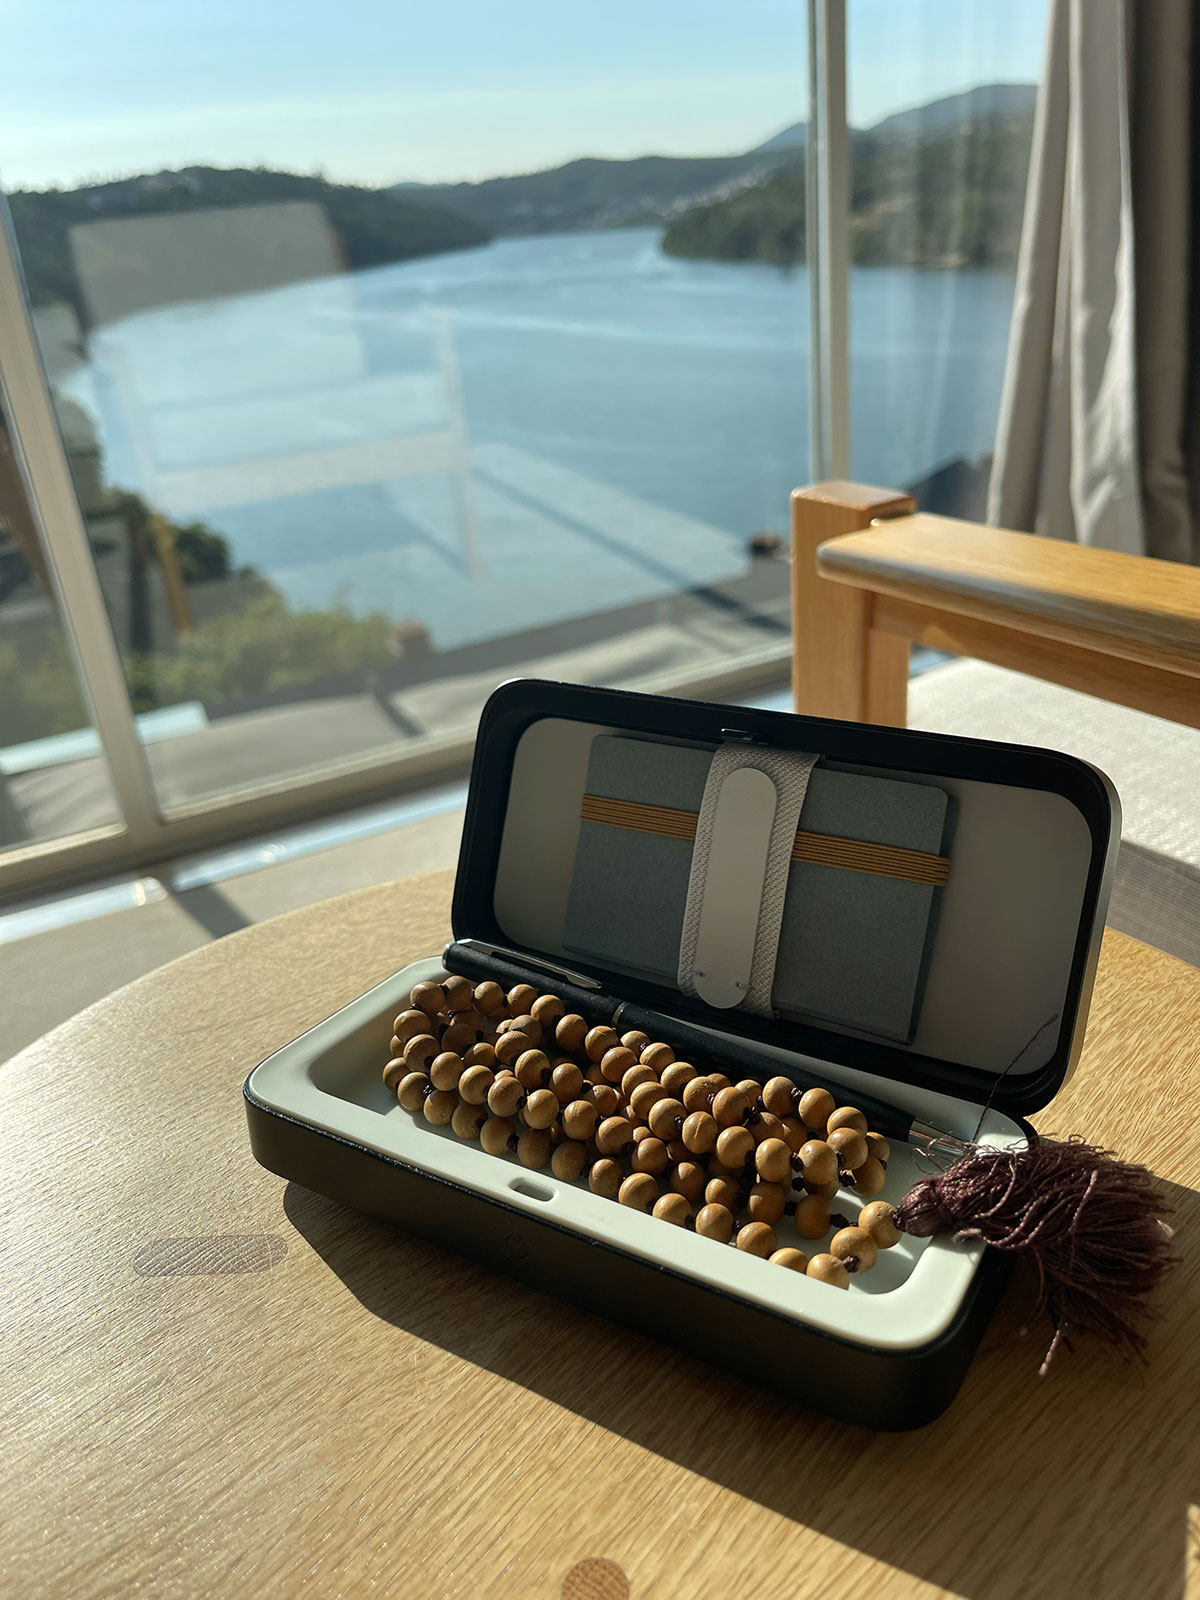 A TROVA safe with meditation beads on a table